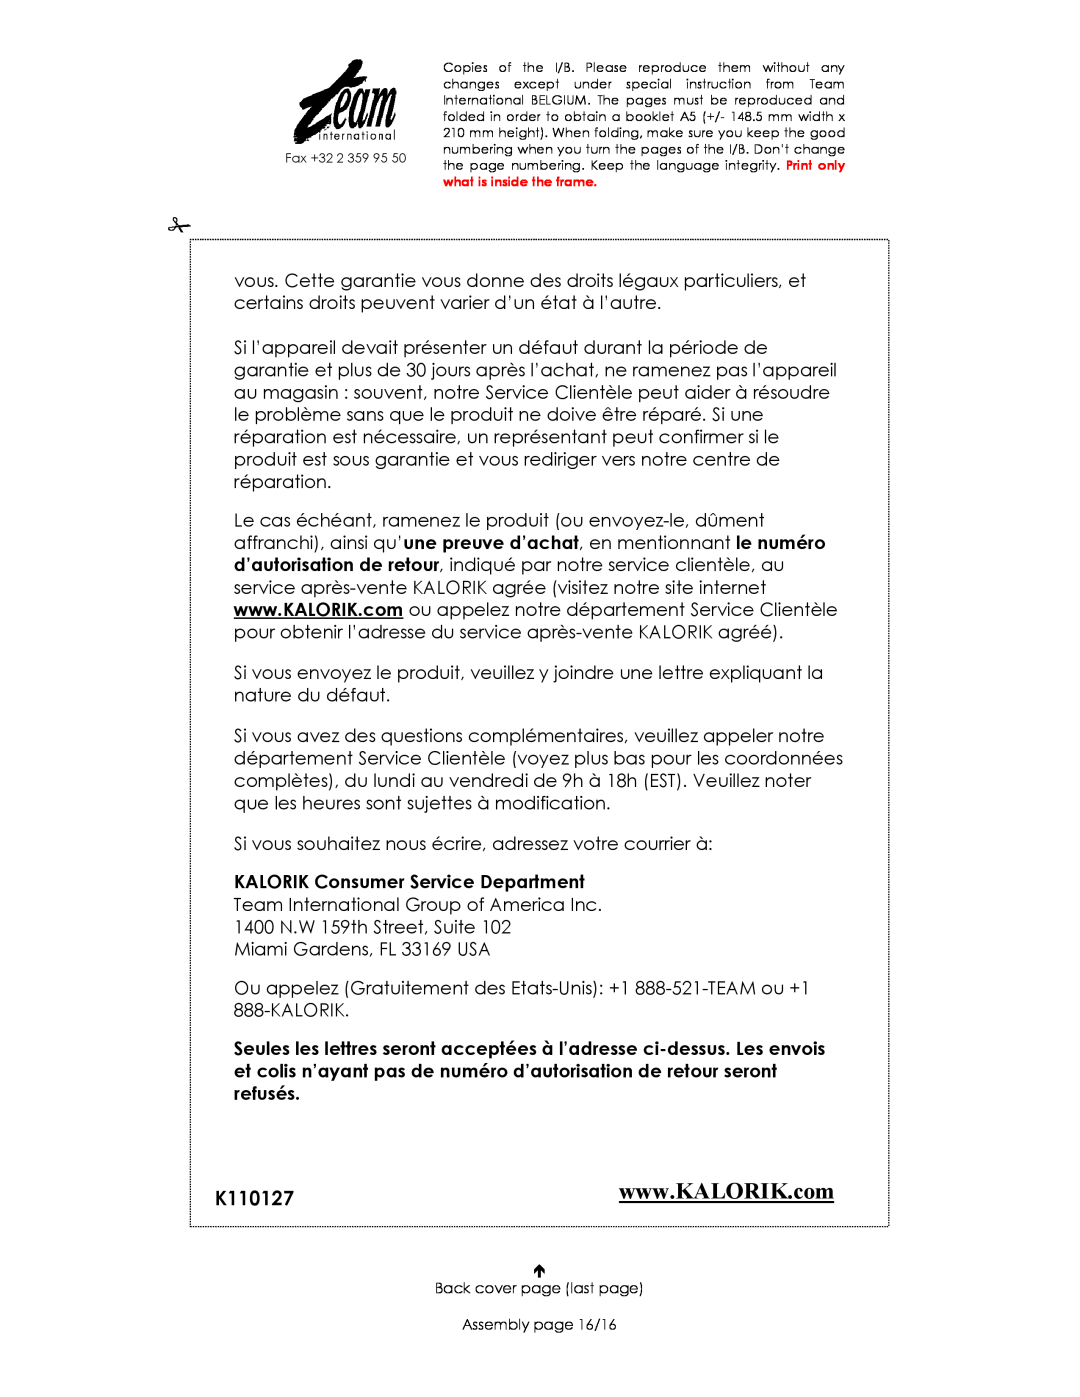 Kalorik USK DKP 21898 manual K110127WWW.KALORIK.COM, KALORIK Consumer Service Department 